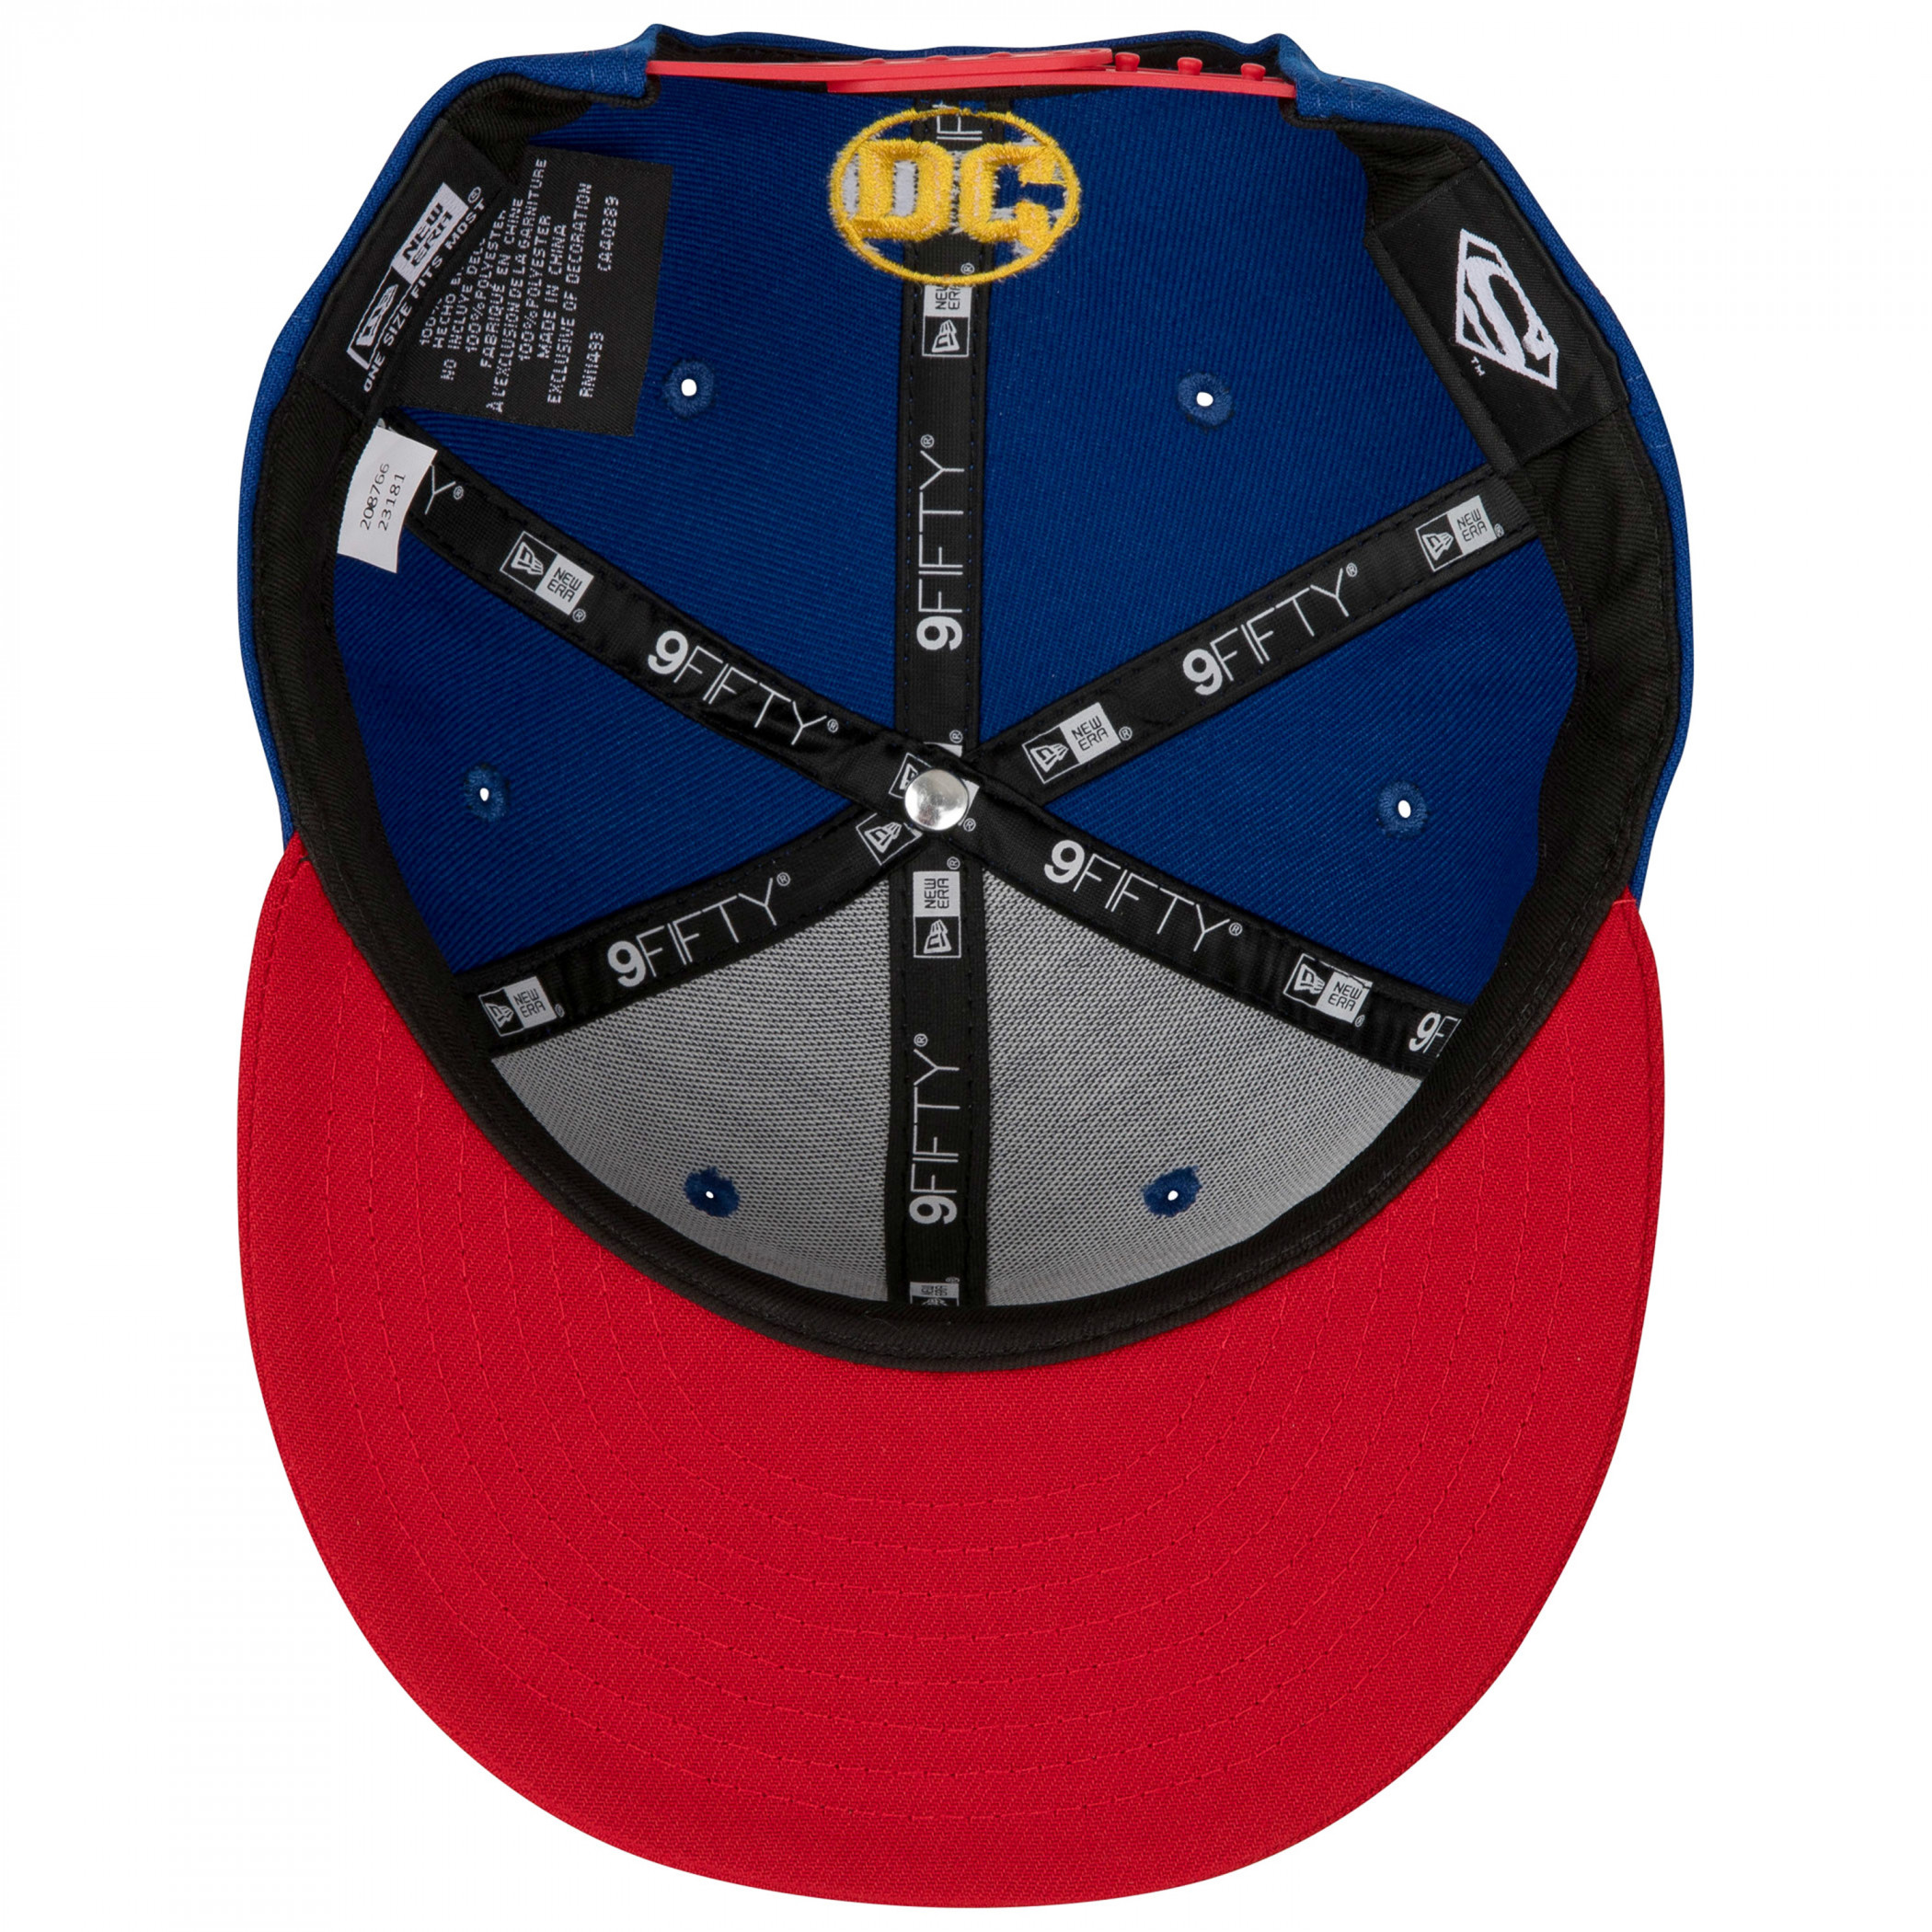 Superman Classic Logo New Era 9Fifty Adjustable Hat